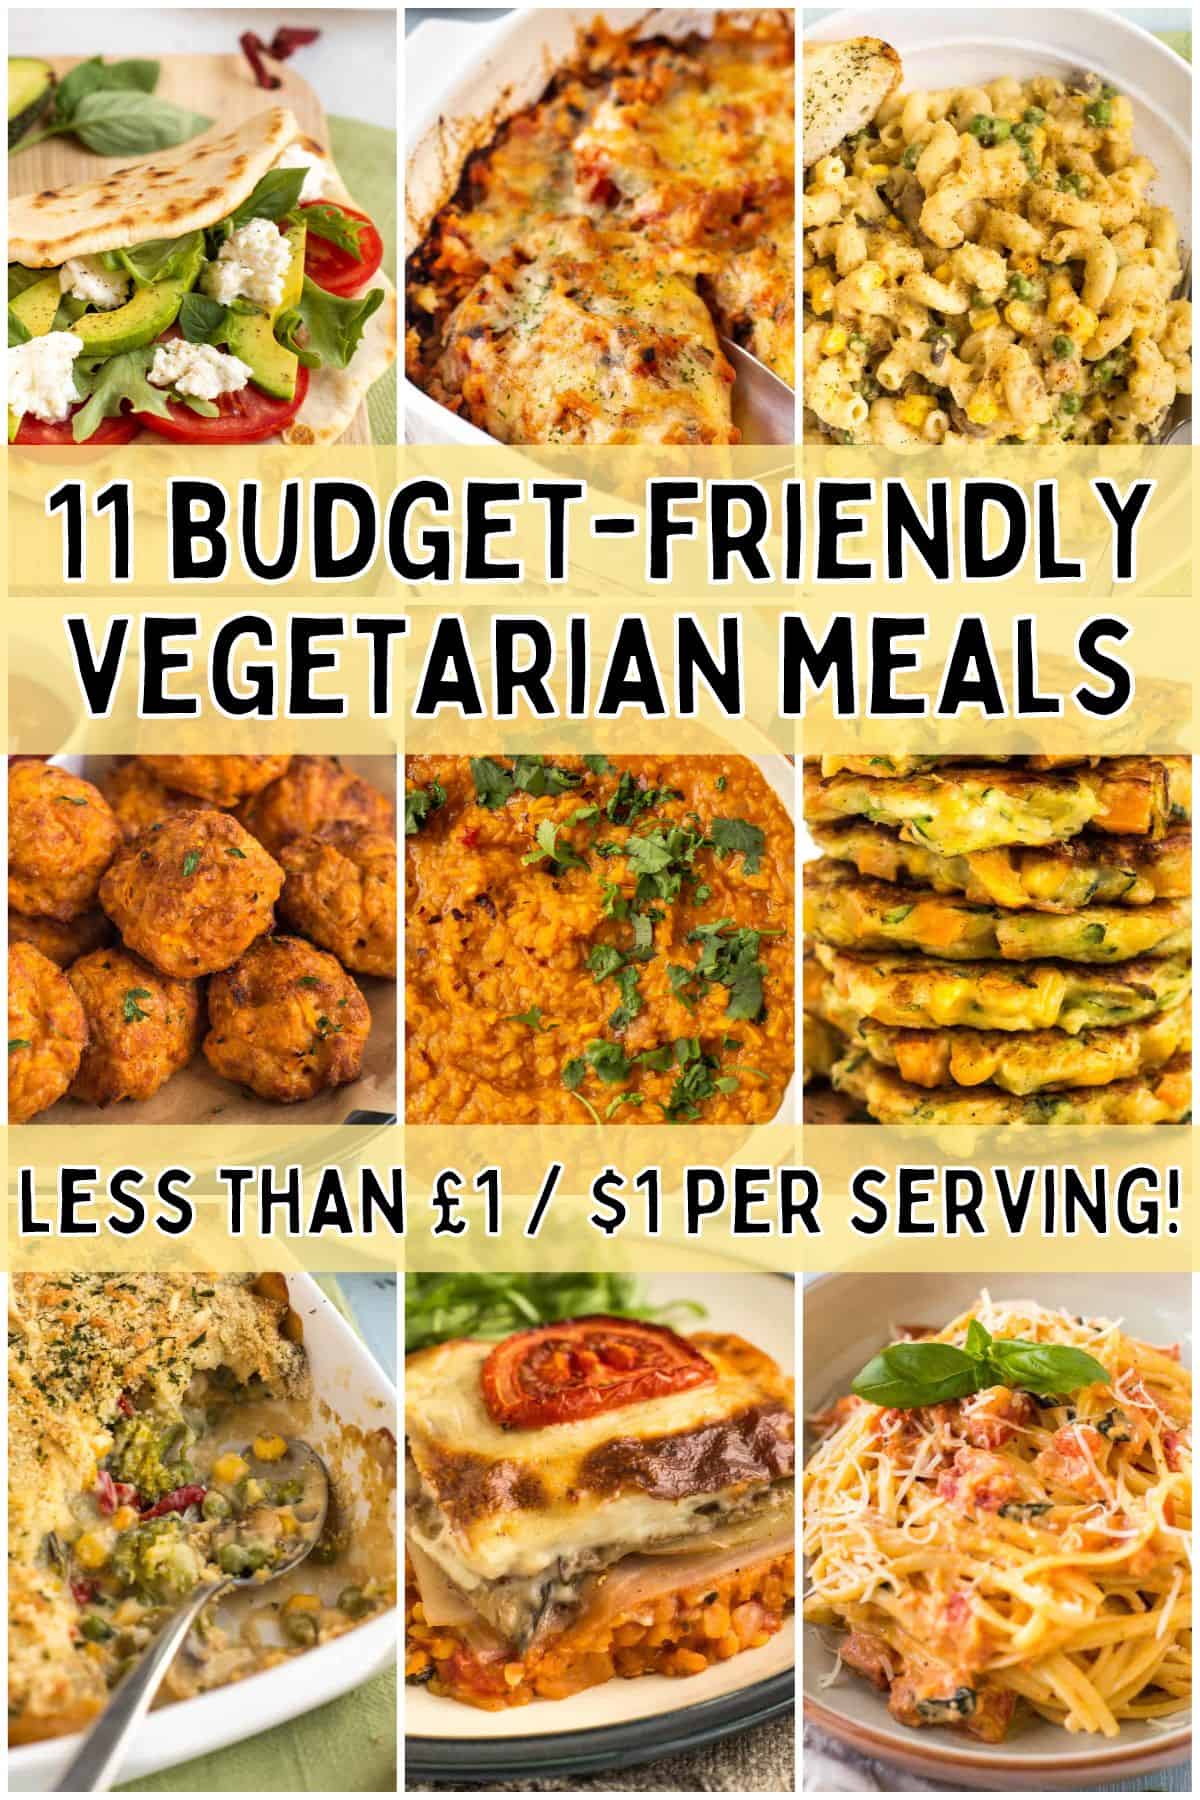 Low-priced vegetarian meals